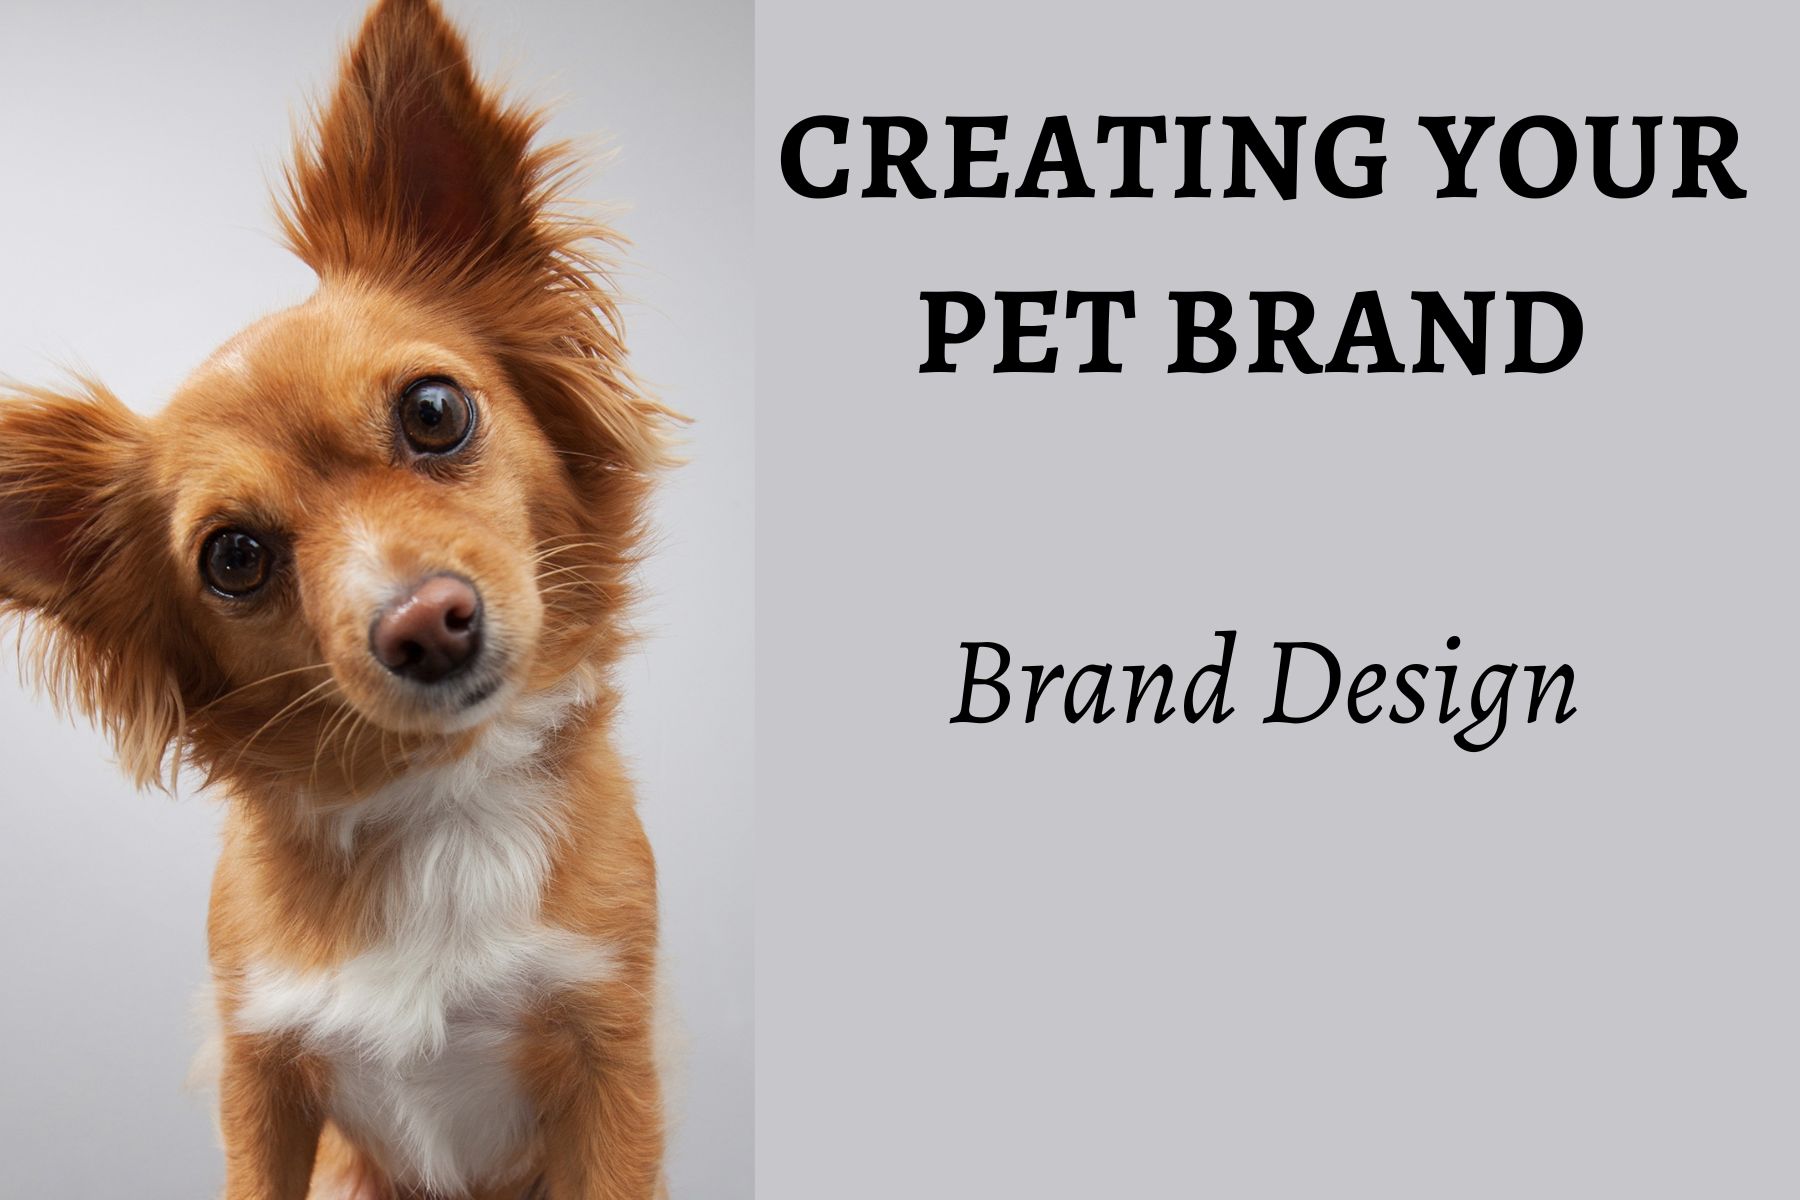 Creating your Pet Brand: Brand Design